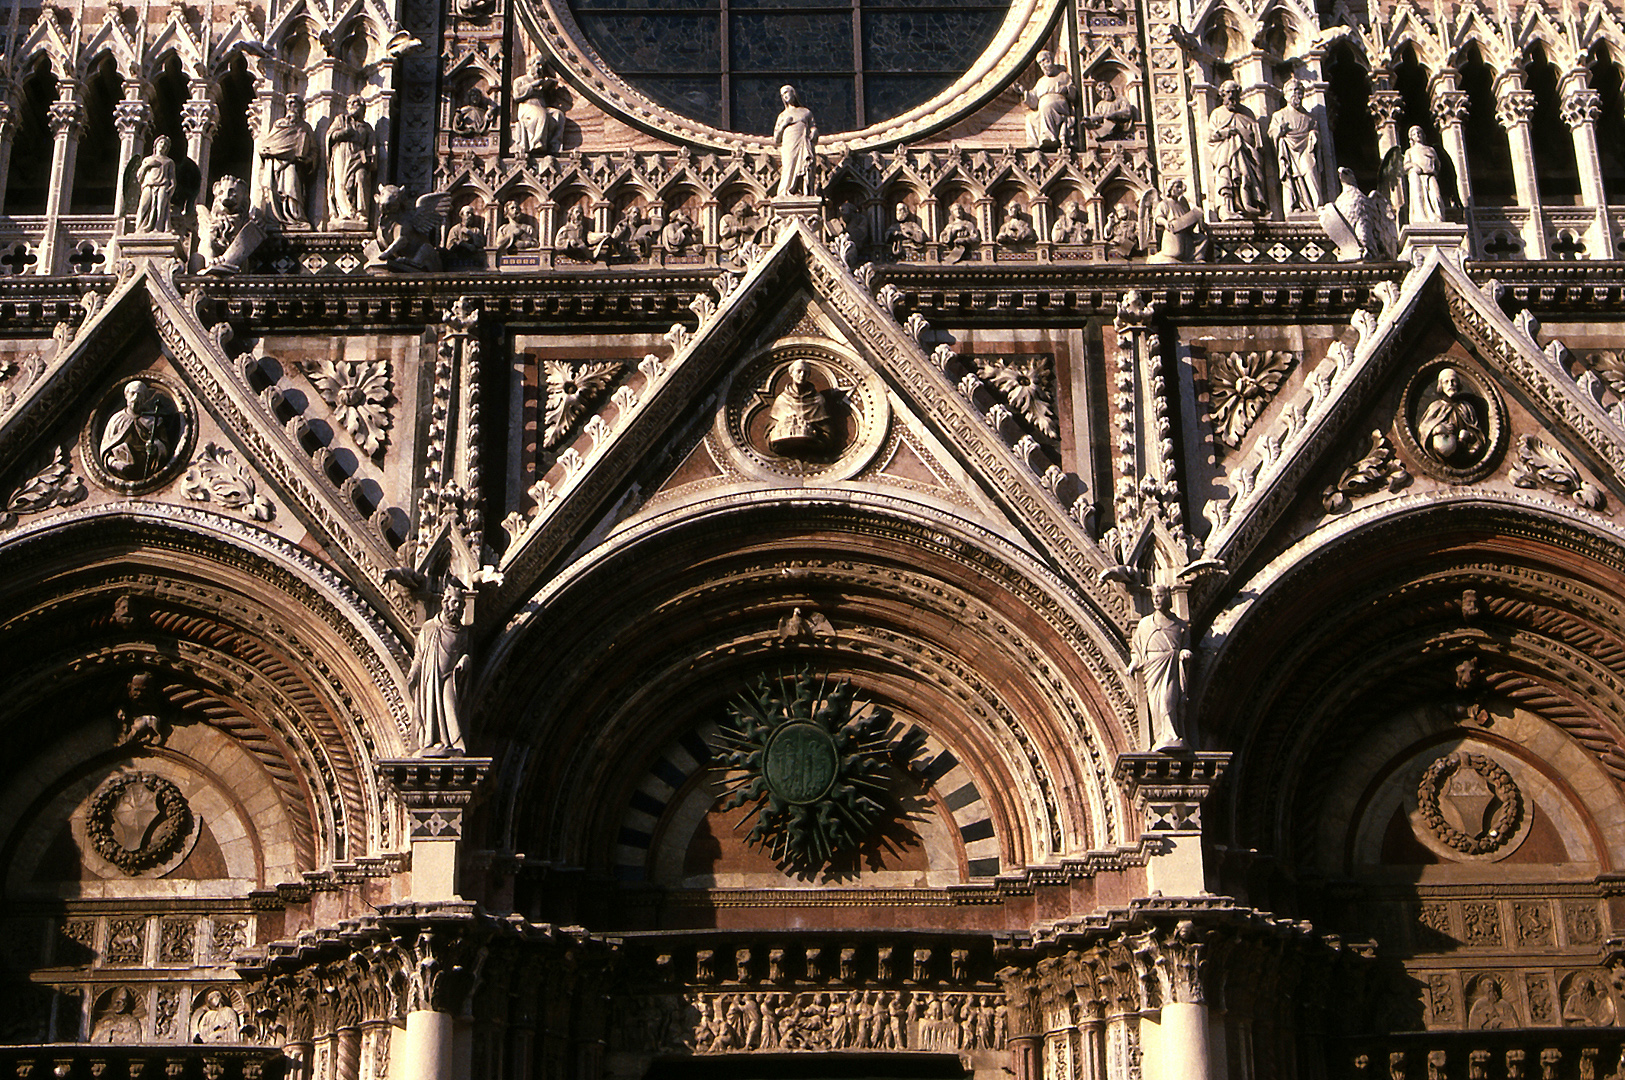 Kathedraal van Siena (Toscane, Itali), Siena Cathedral (Tuscany, Italy)